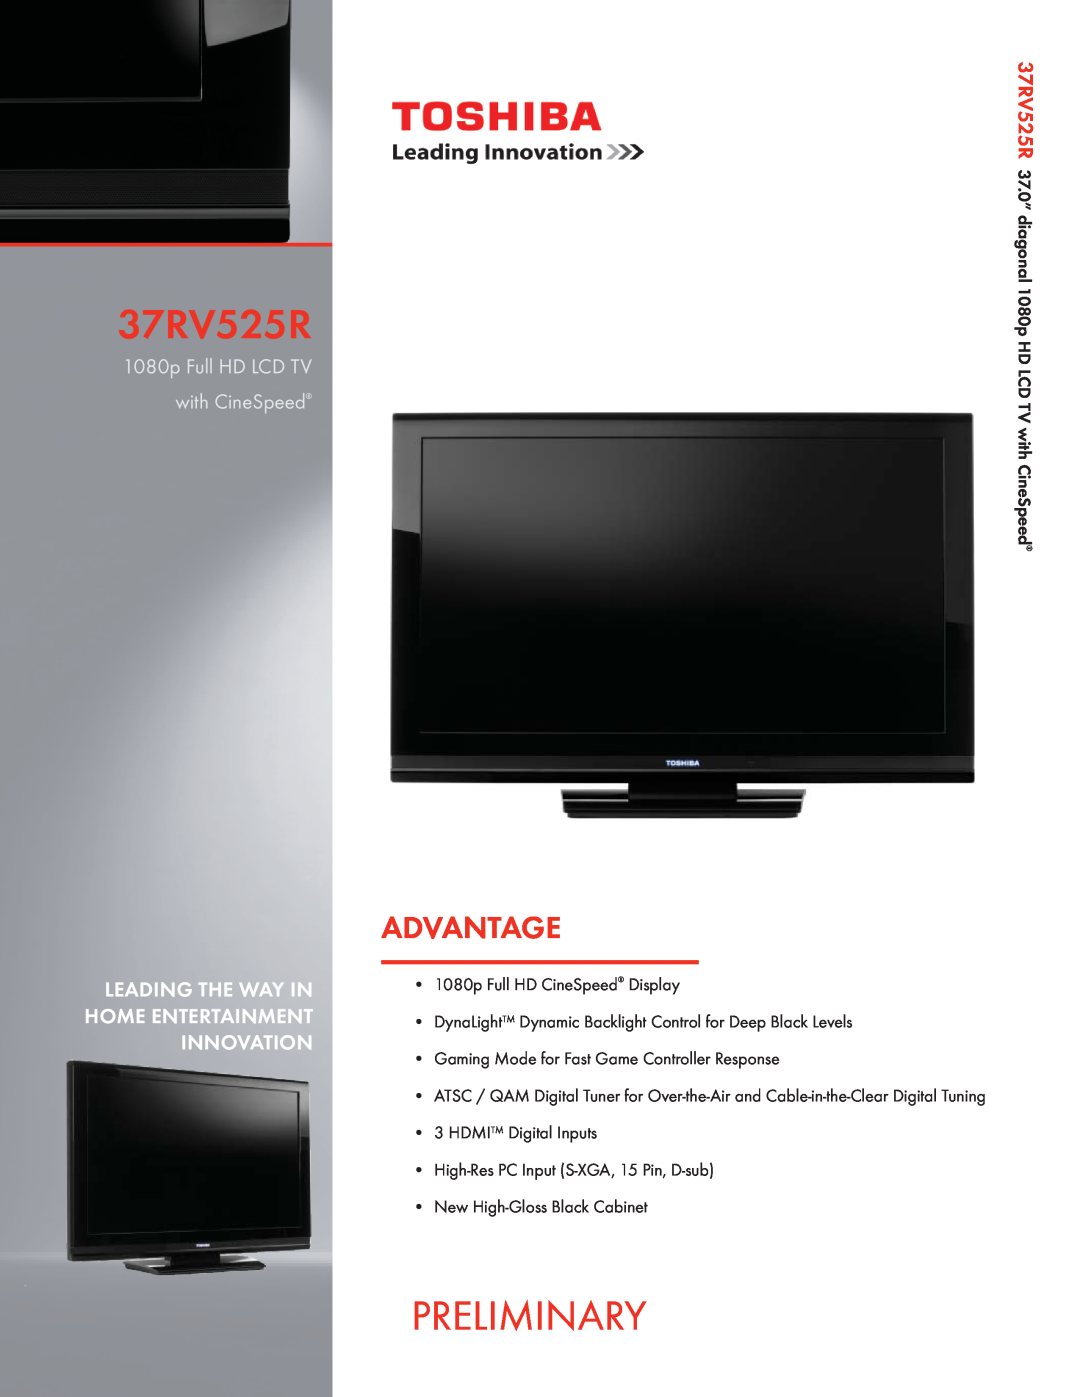 Toshiba 37RV525R manual Preliminary, Advantage, 1080p Full HD LCD TV with CineSpeed 